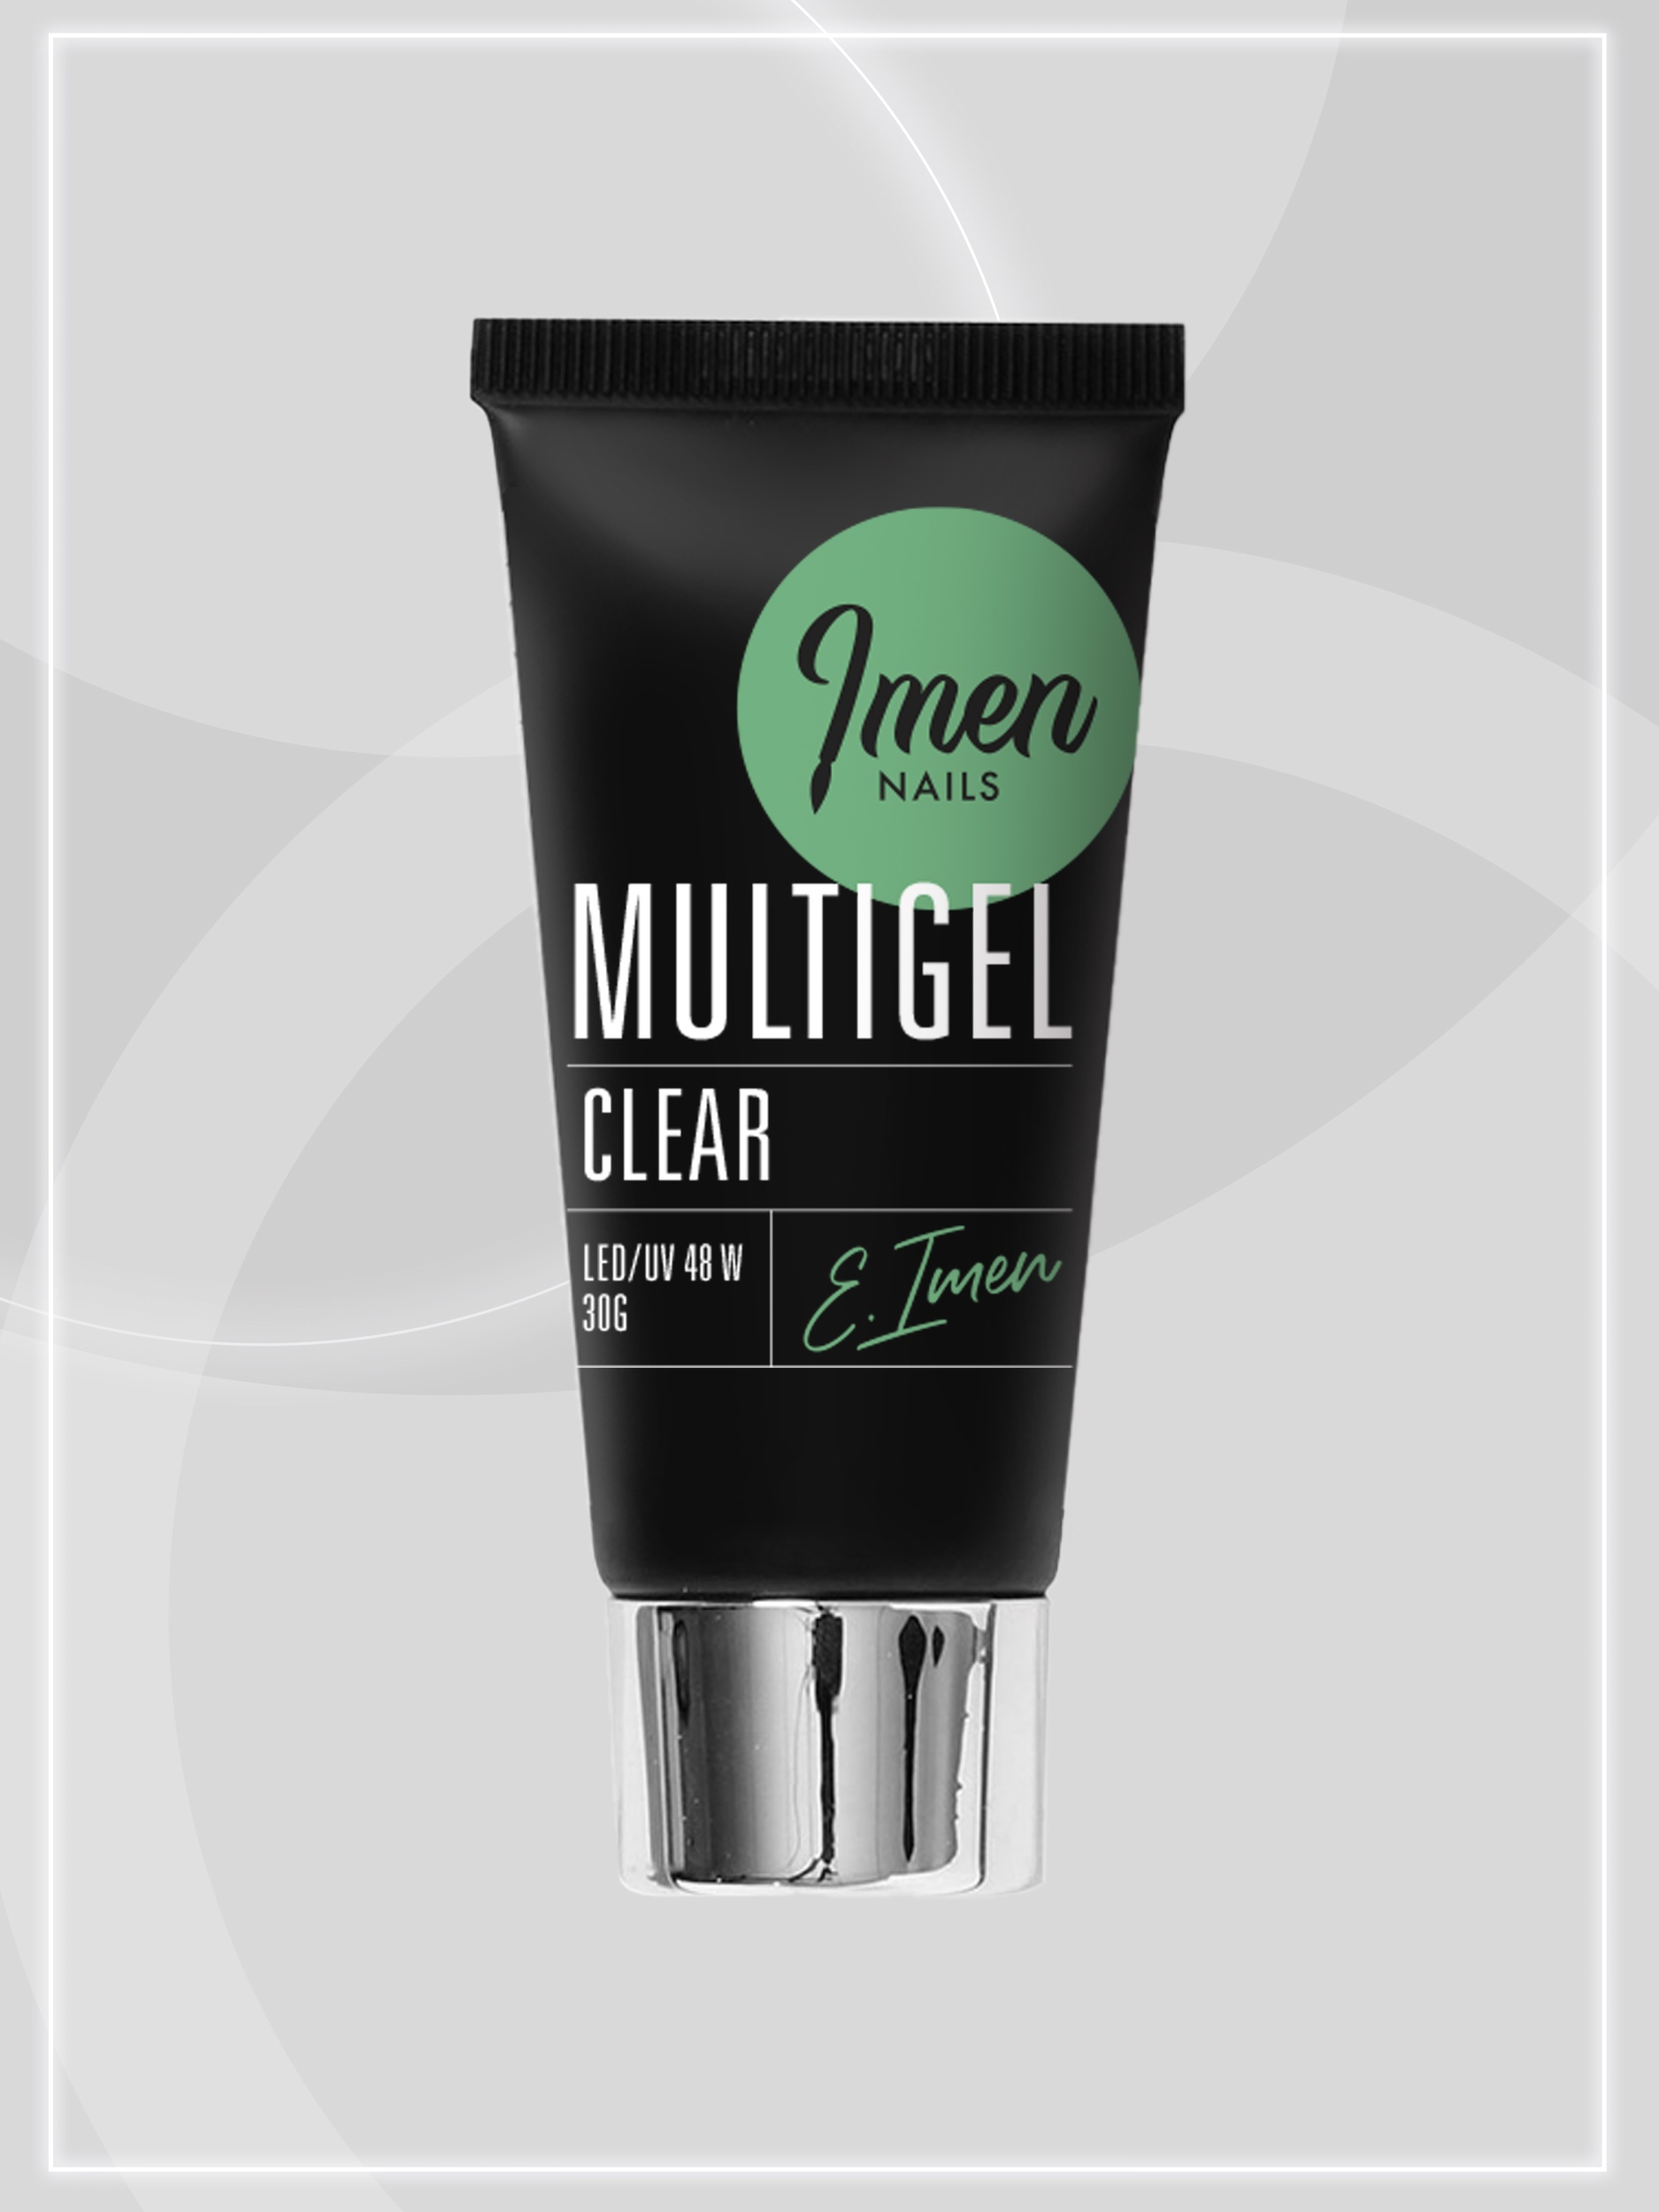 Multigel Clear Мультигель (прозрачный) Imen, 30мл СКИДКА 50%